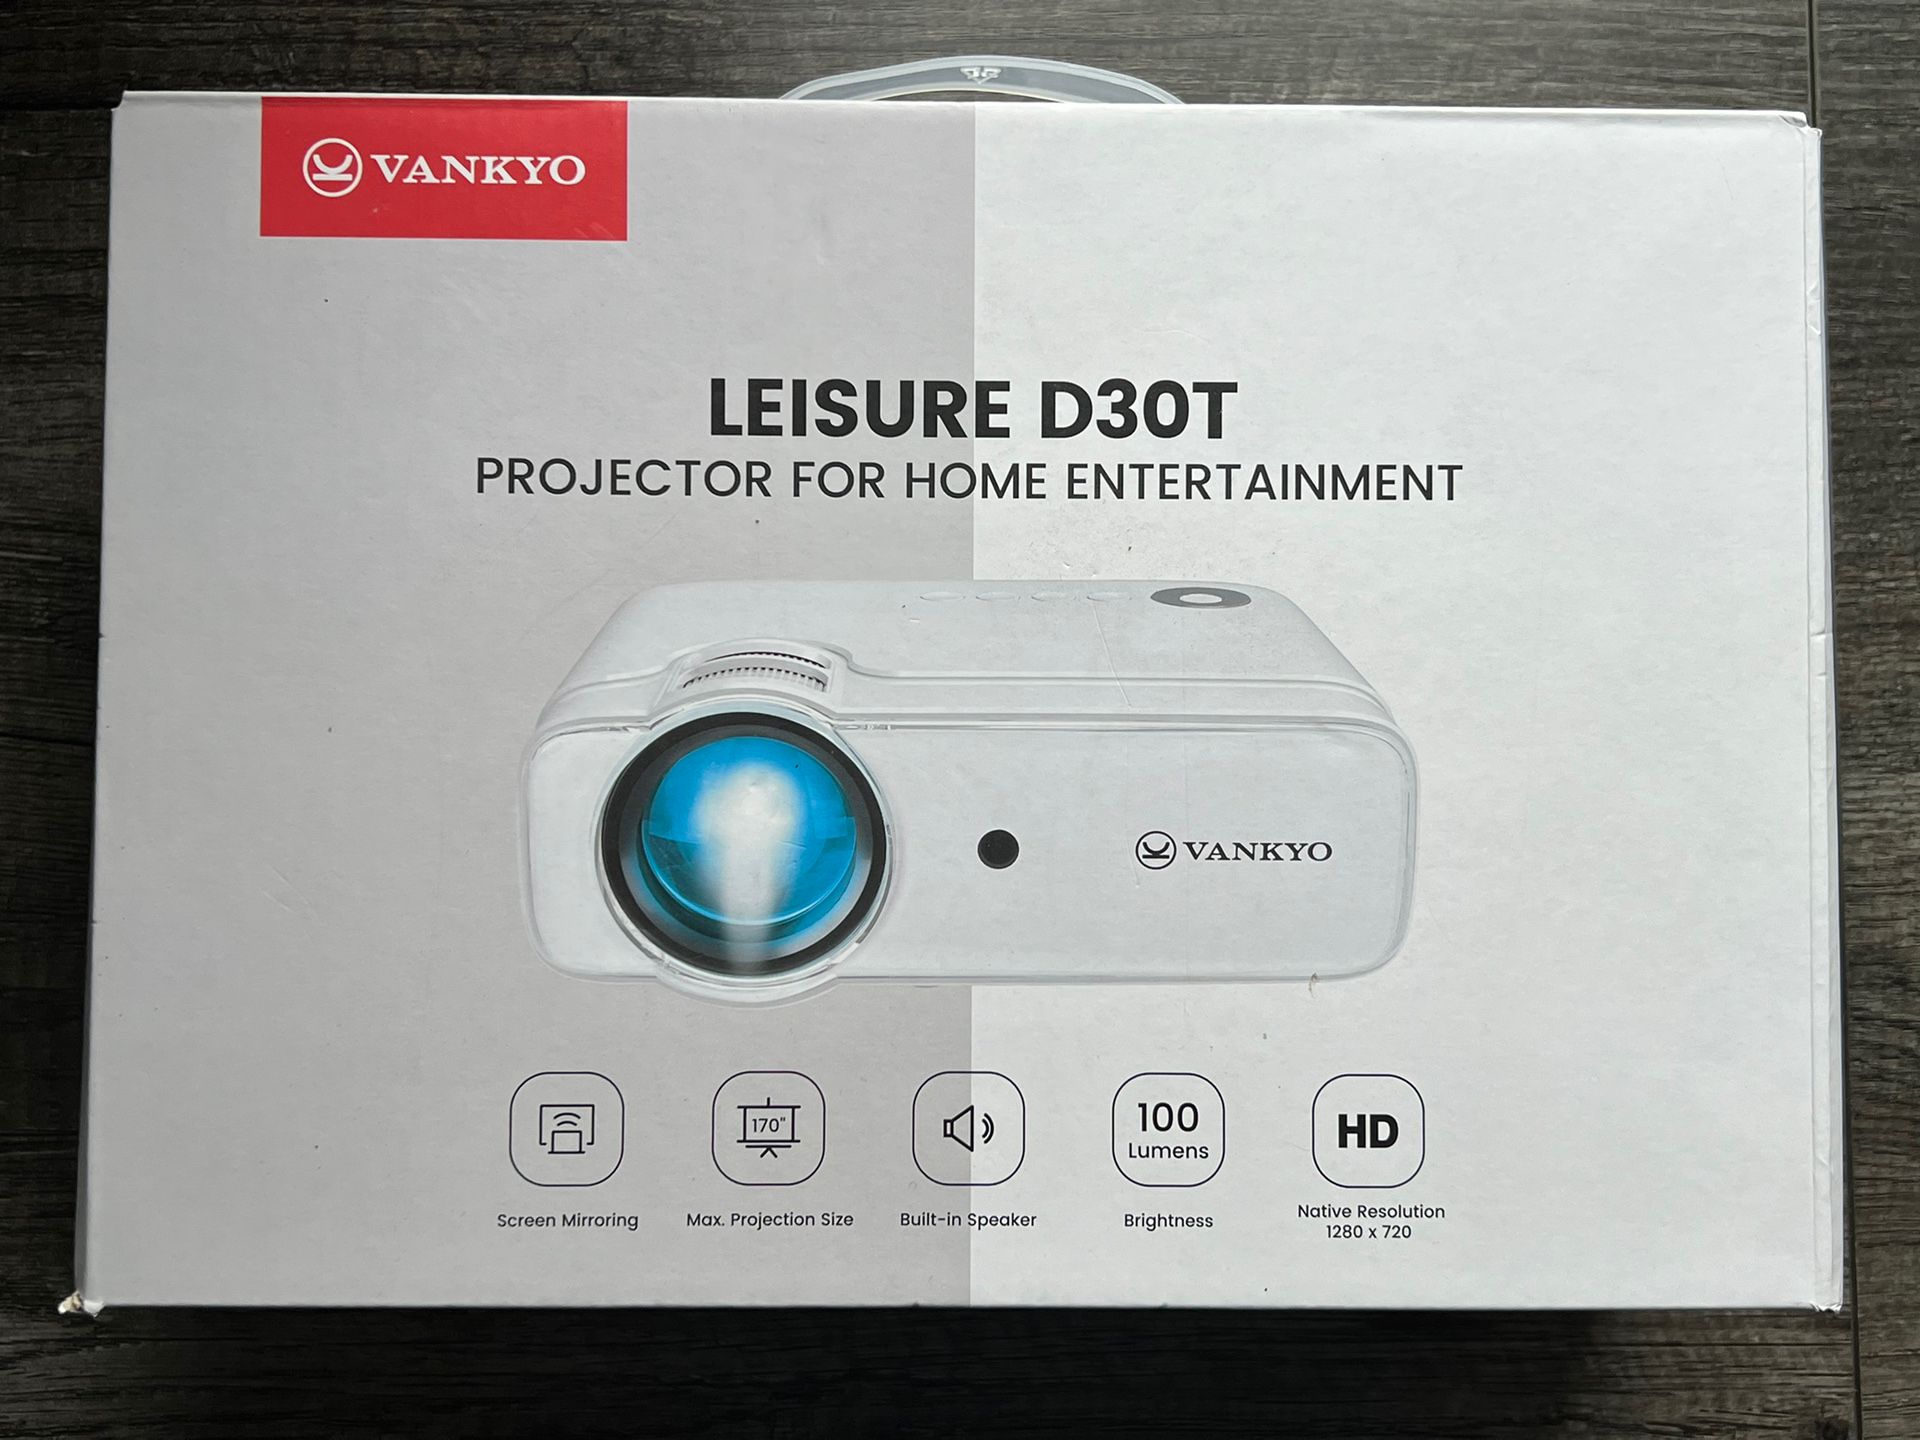  VANKYO Leisure D30T Mini Wi-Fi Projector